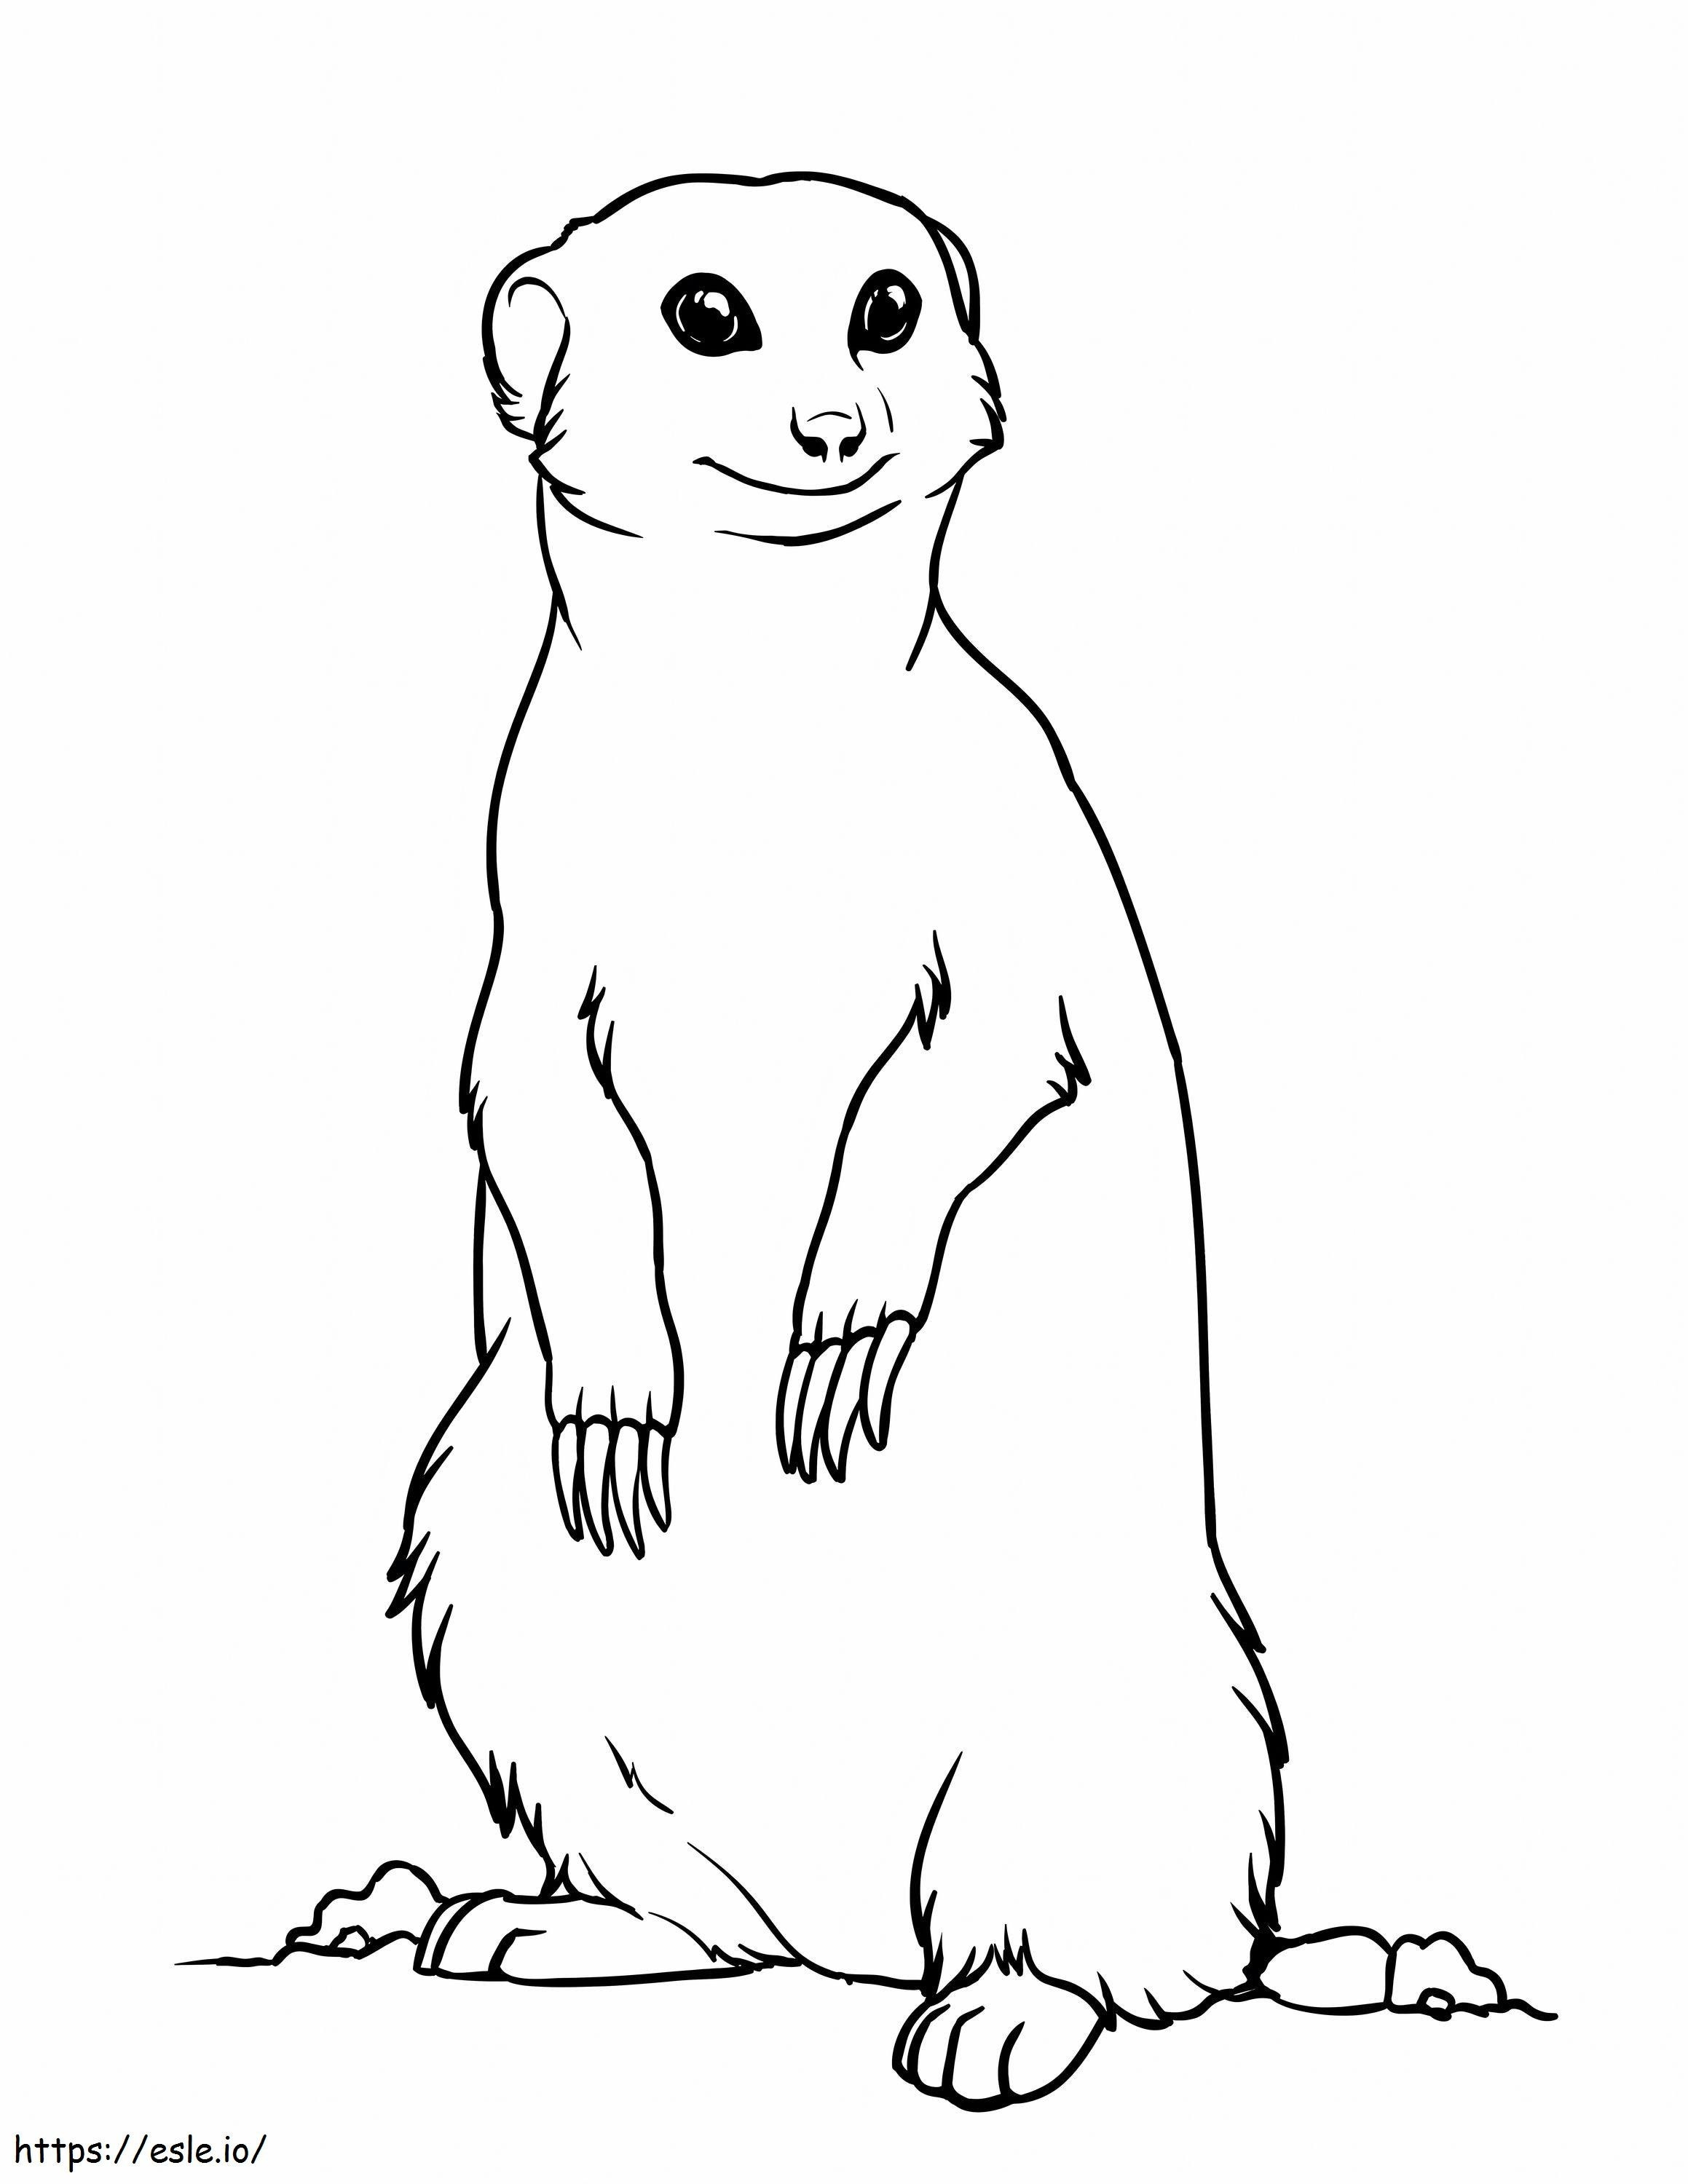 Meerkat imprimível em escala para colorir